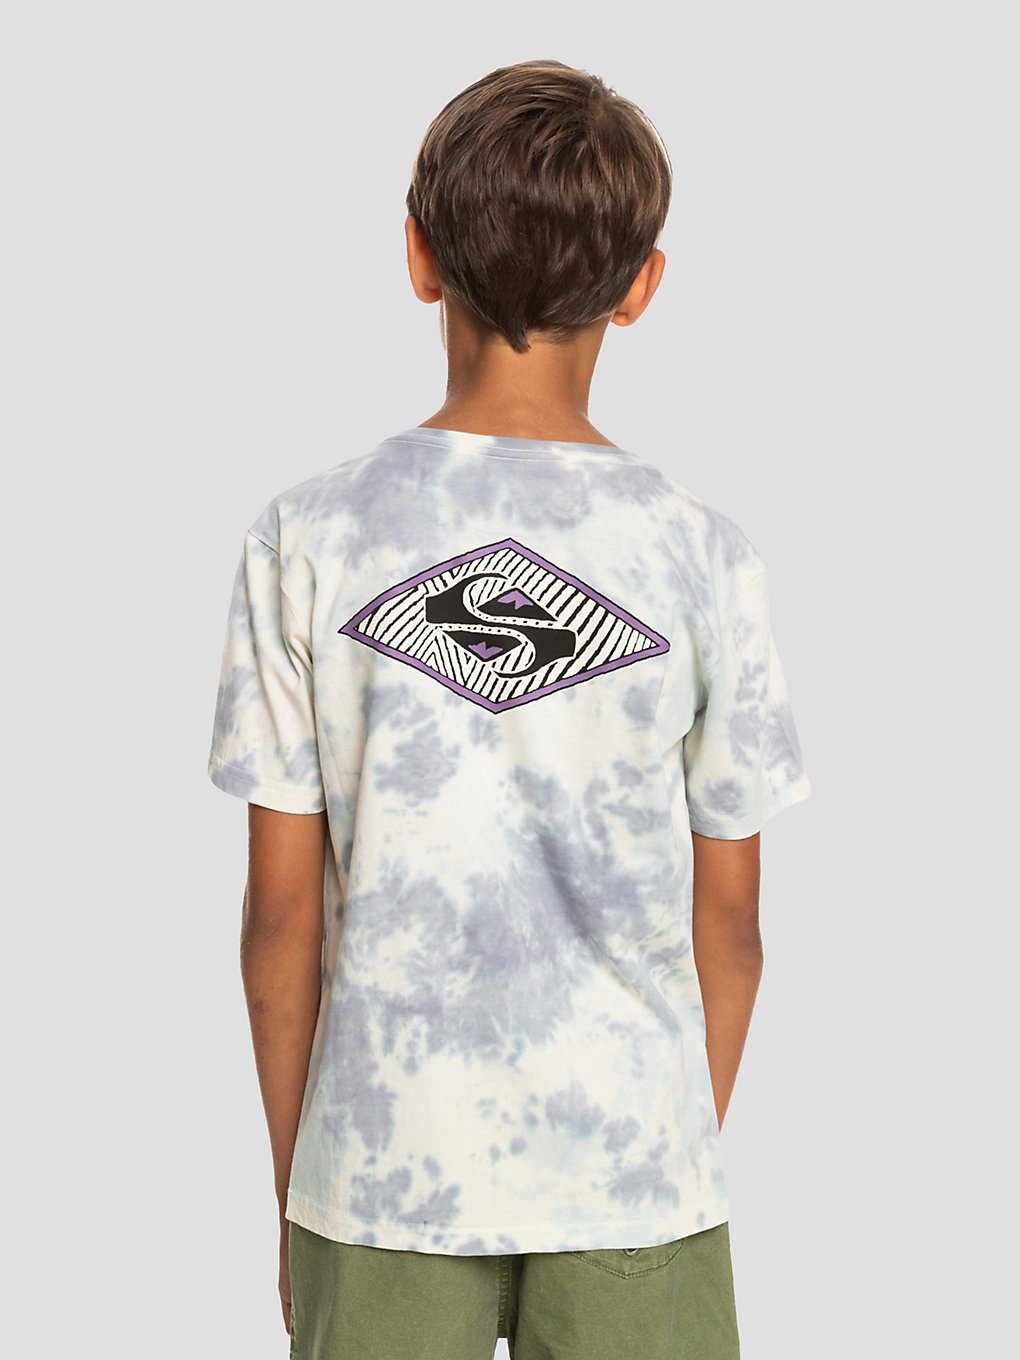 Quiksilver Diamond Heritage T-Shirt gray violet kaufen